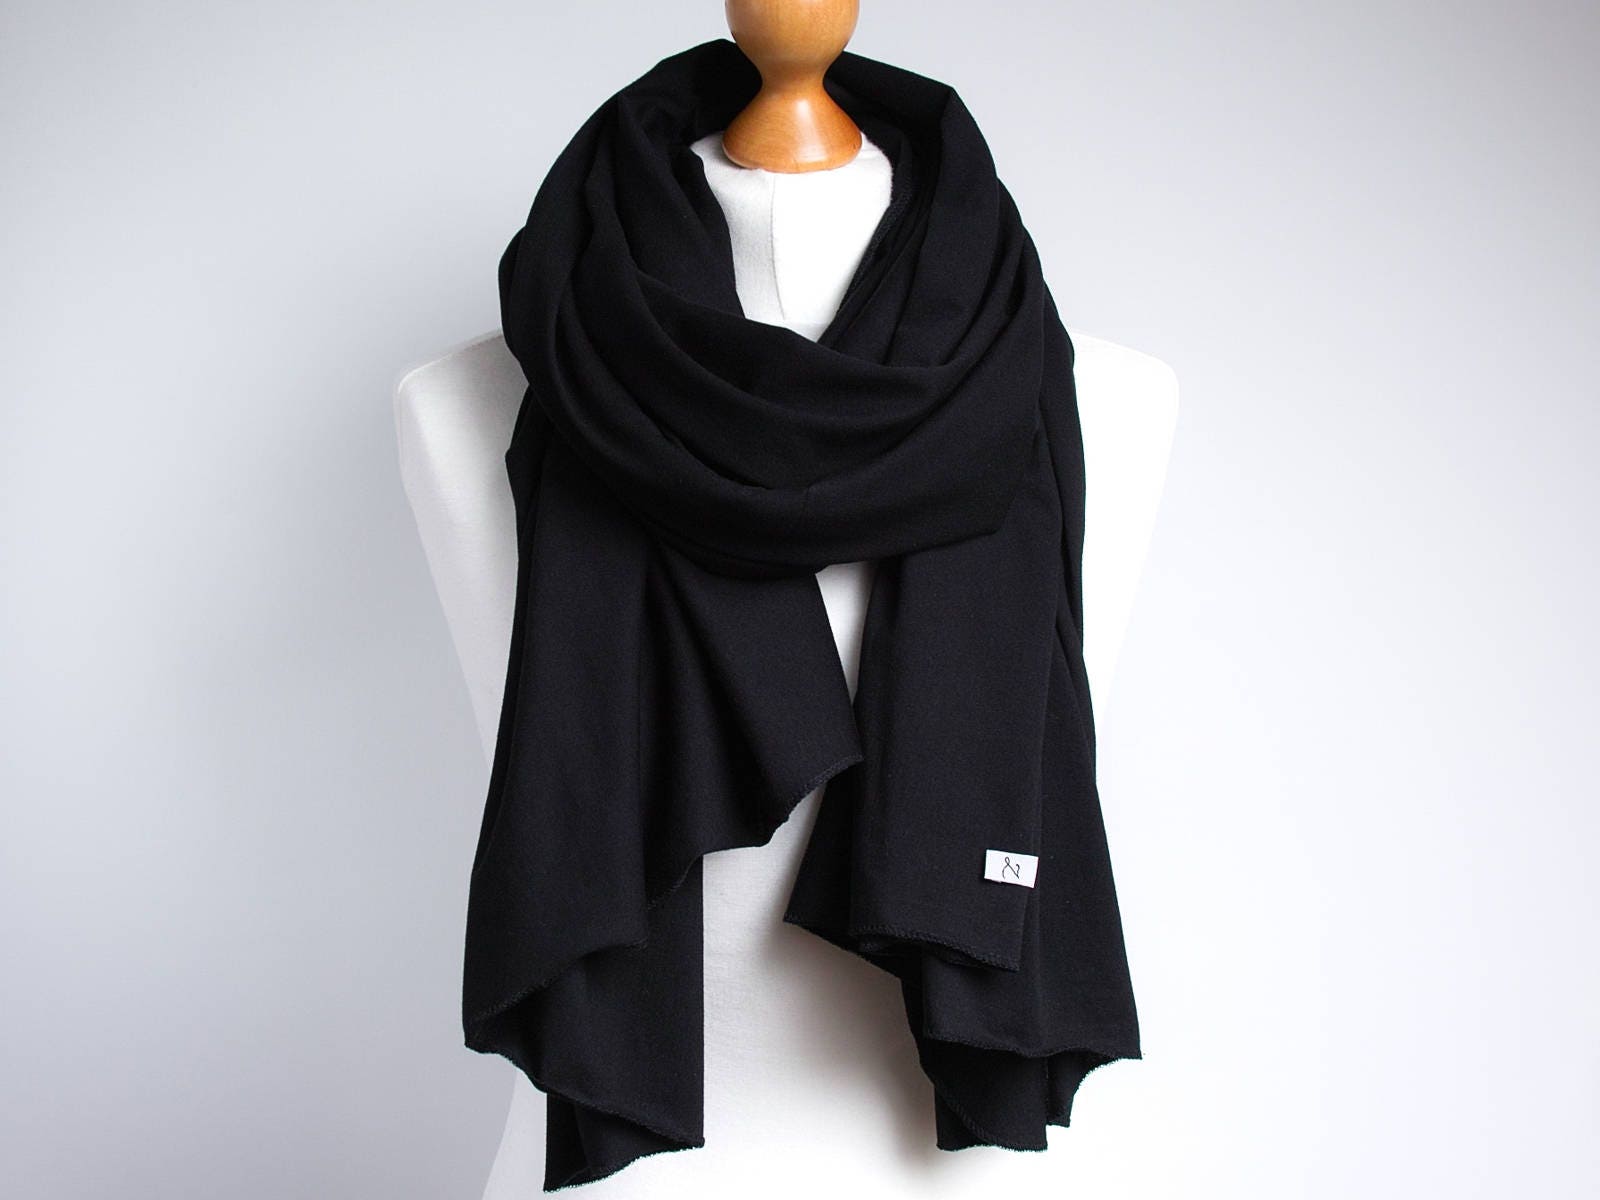 Cotton SHAWL, large scarf fashion scarf, fashion accessories, ecofriendly scarf handmade, cotton wrap, shawl